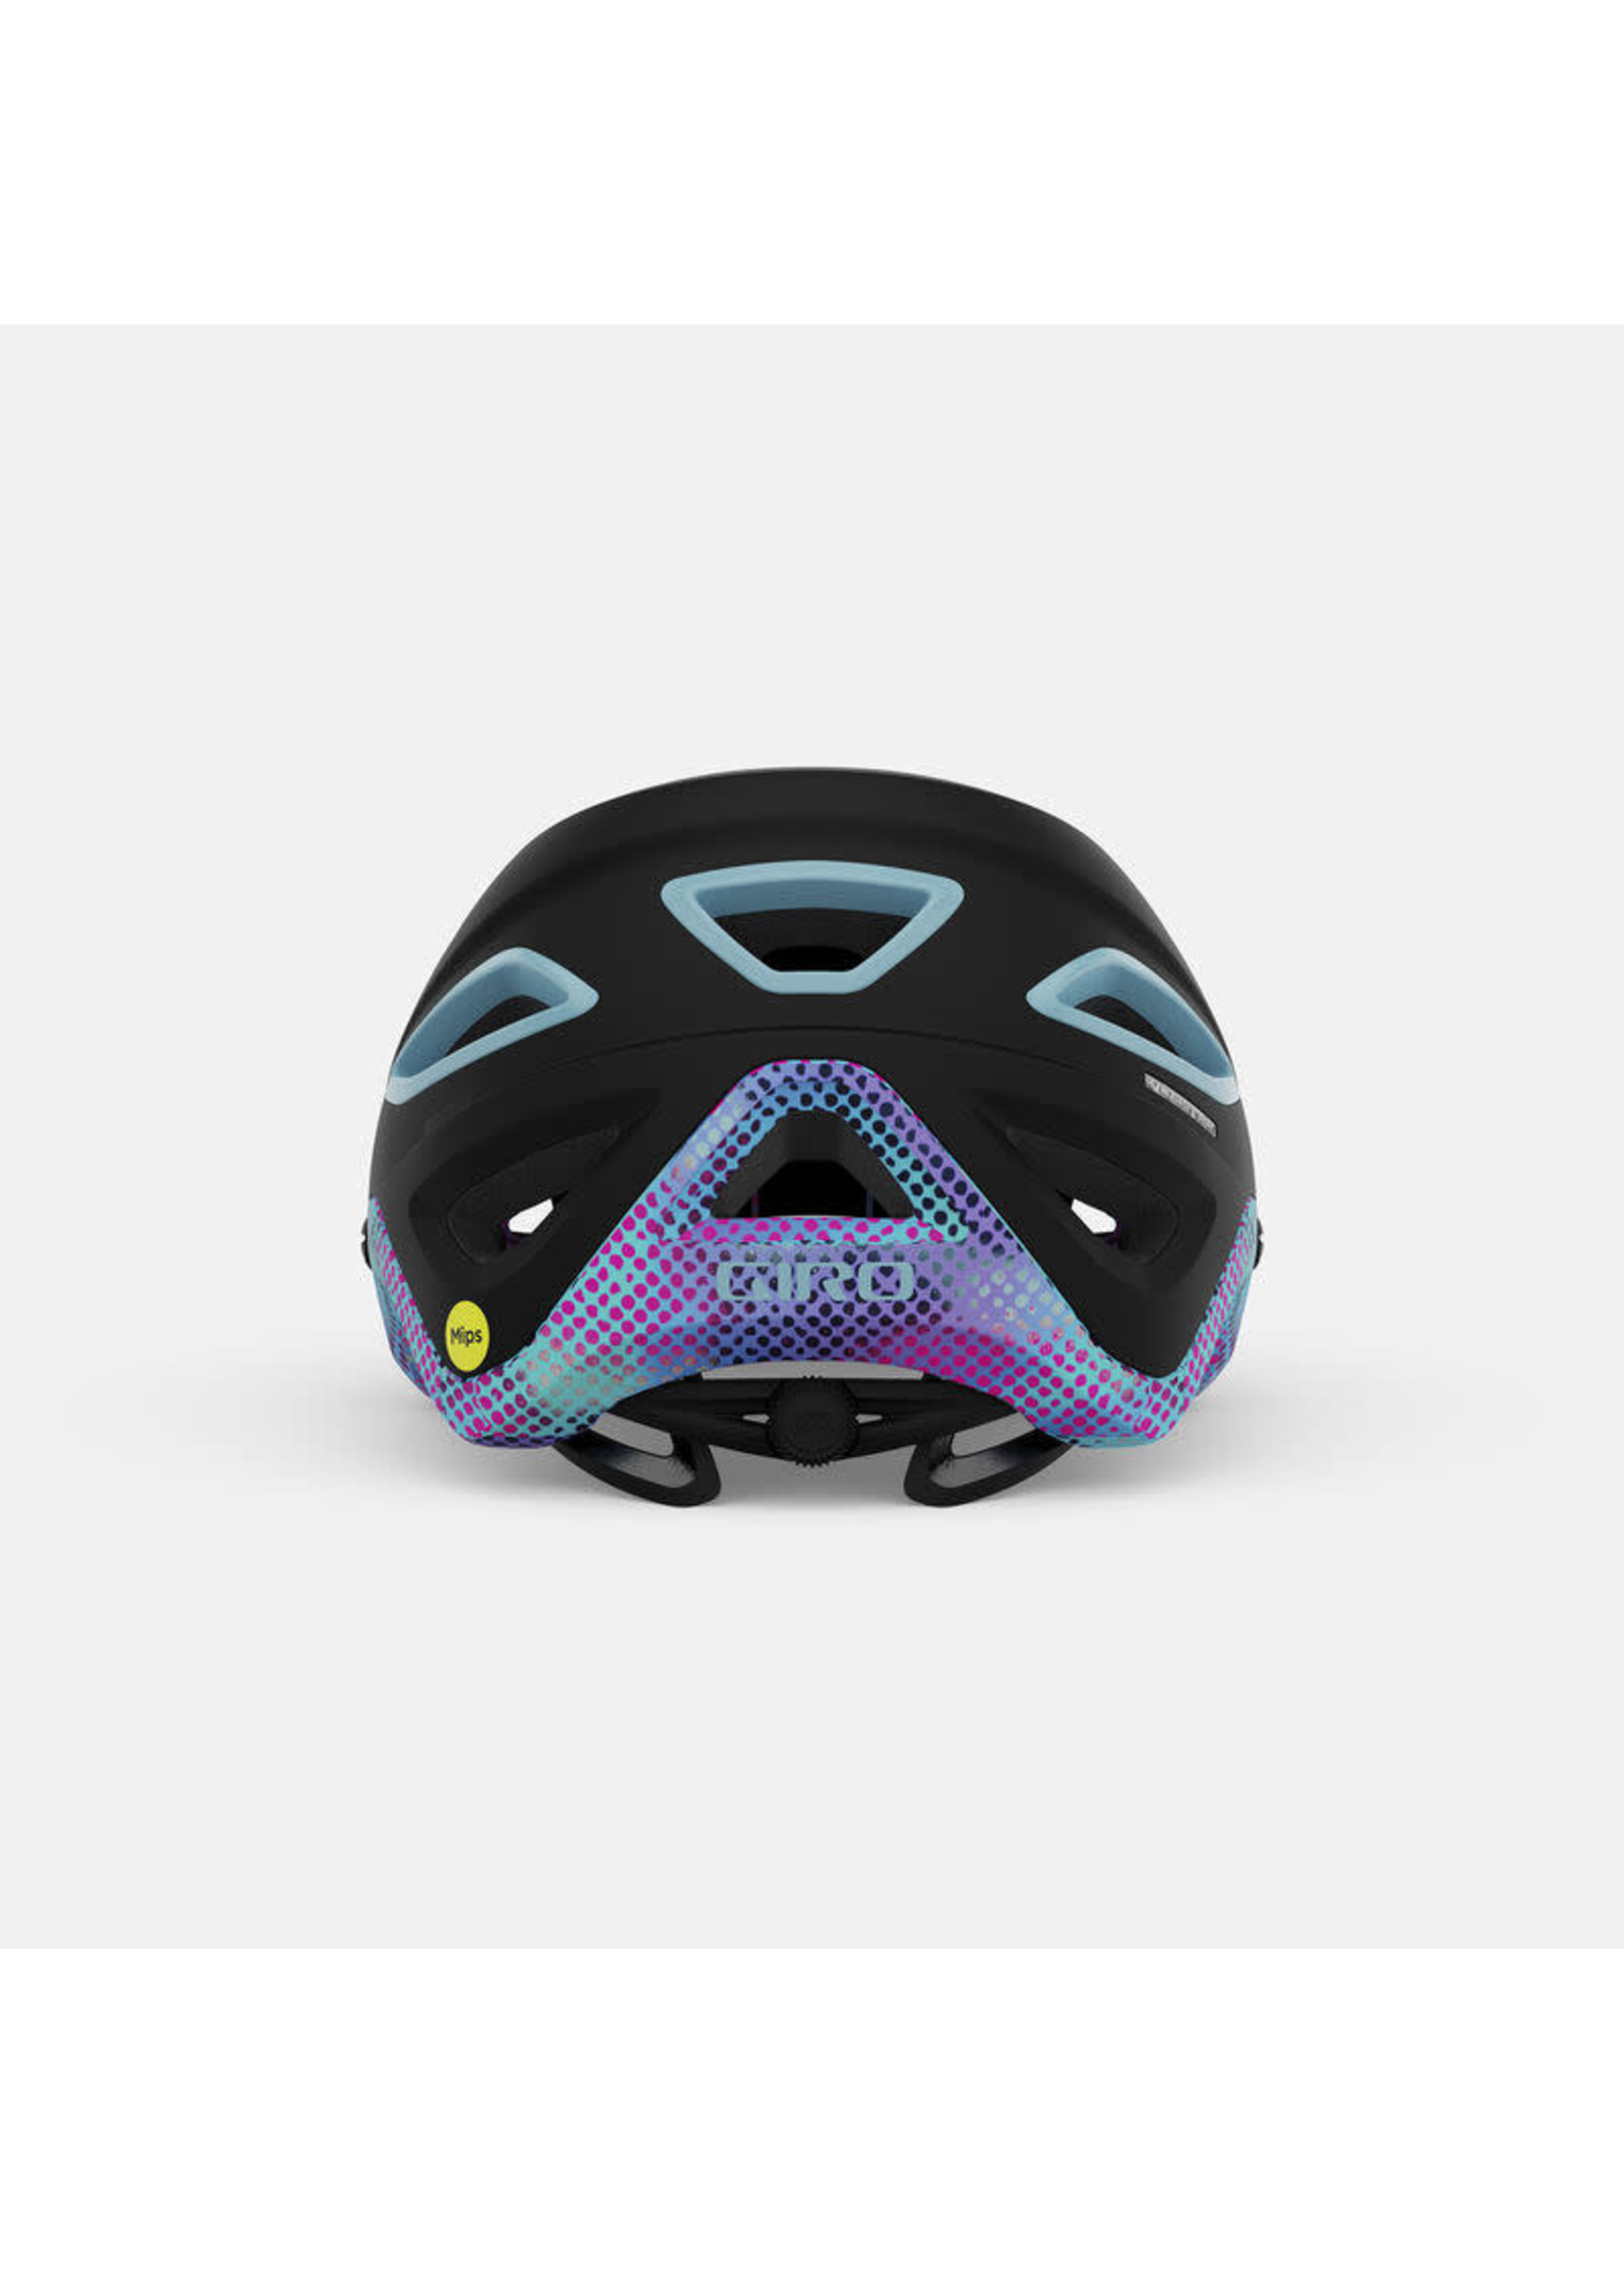 Giro Giro Women's Montaro MIPS II Helmet